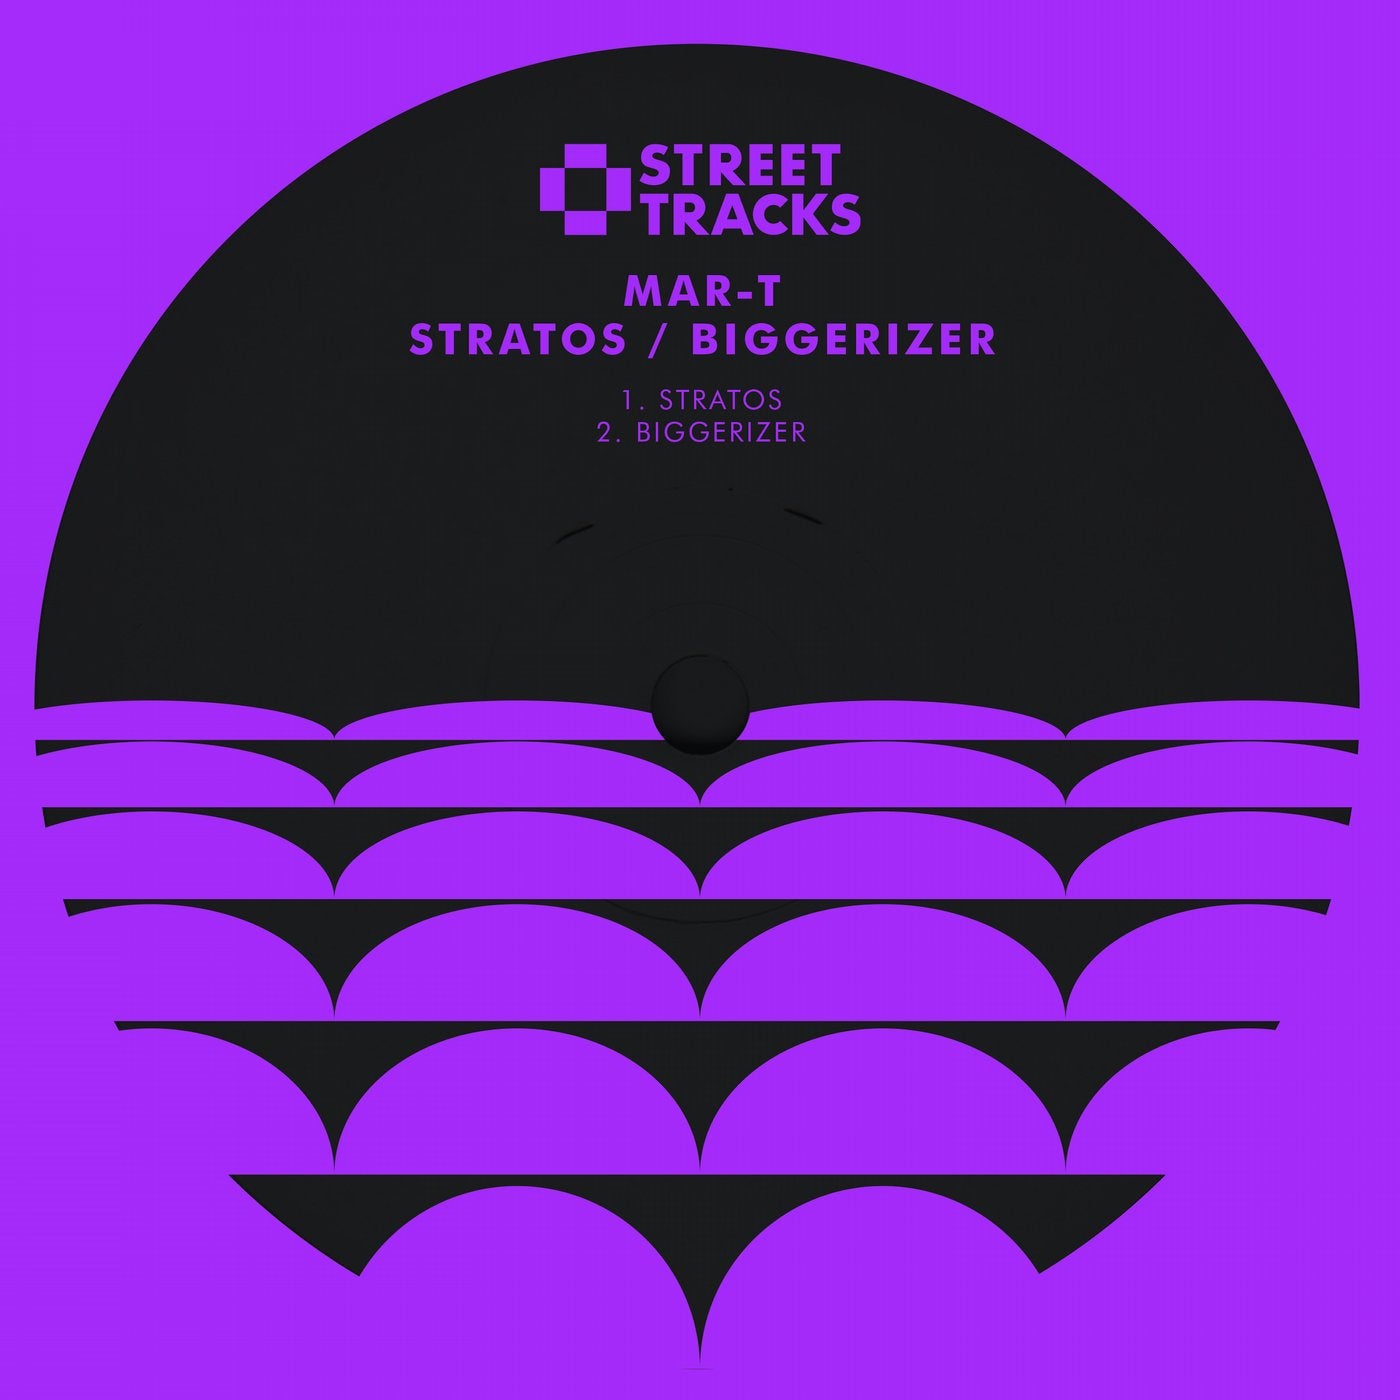 Stratos/Biggerizer